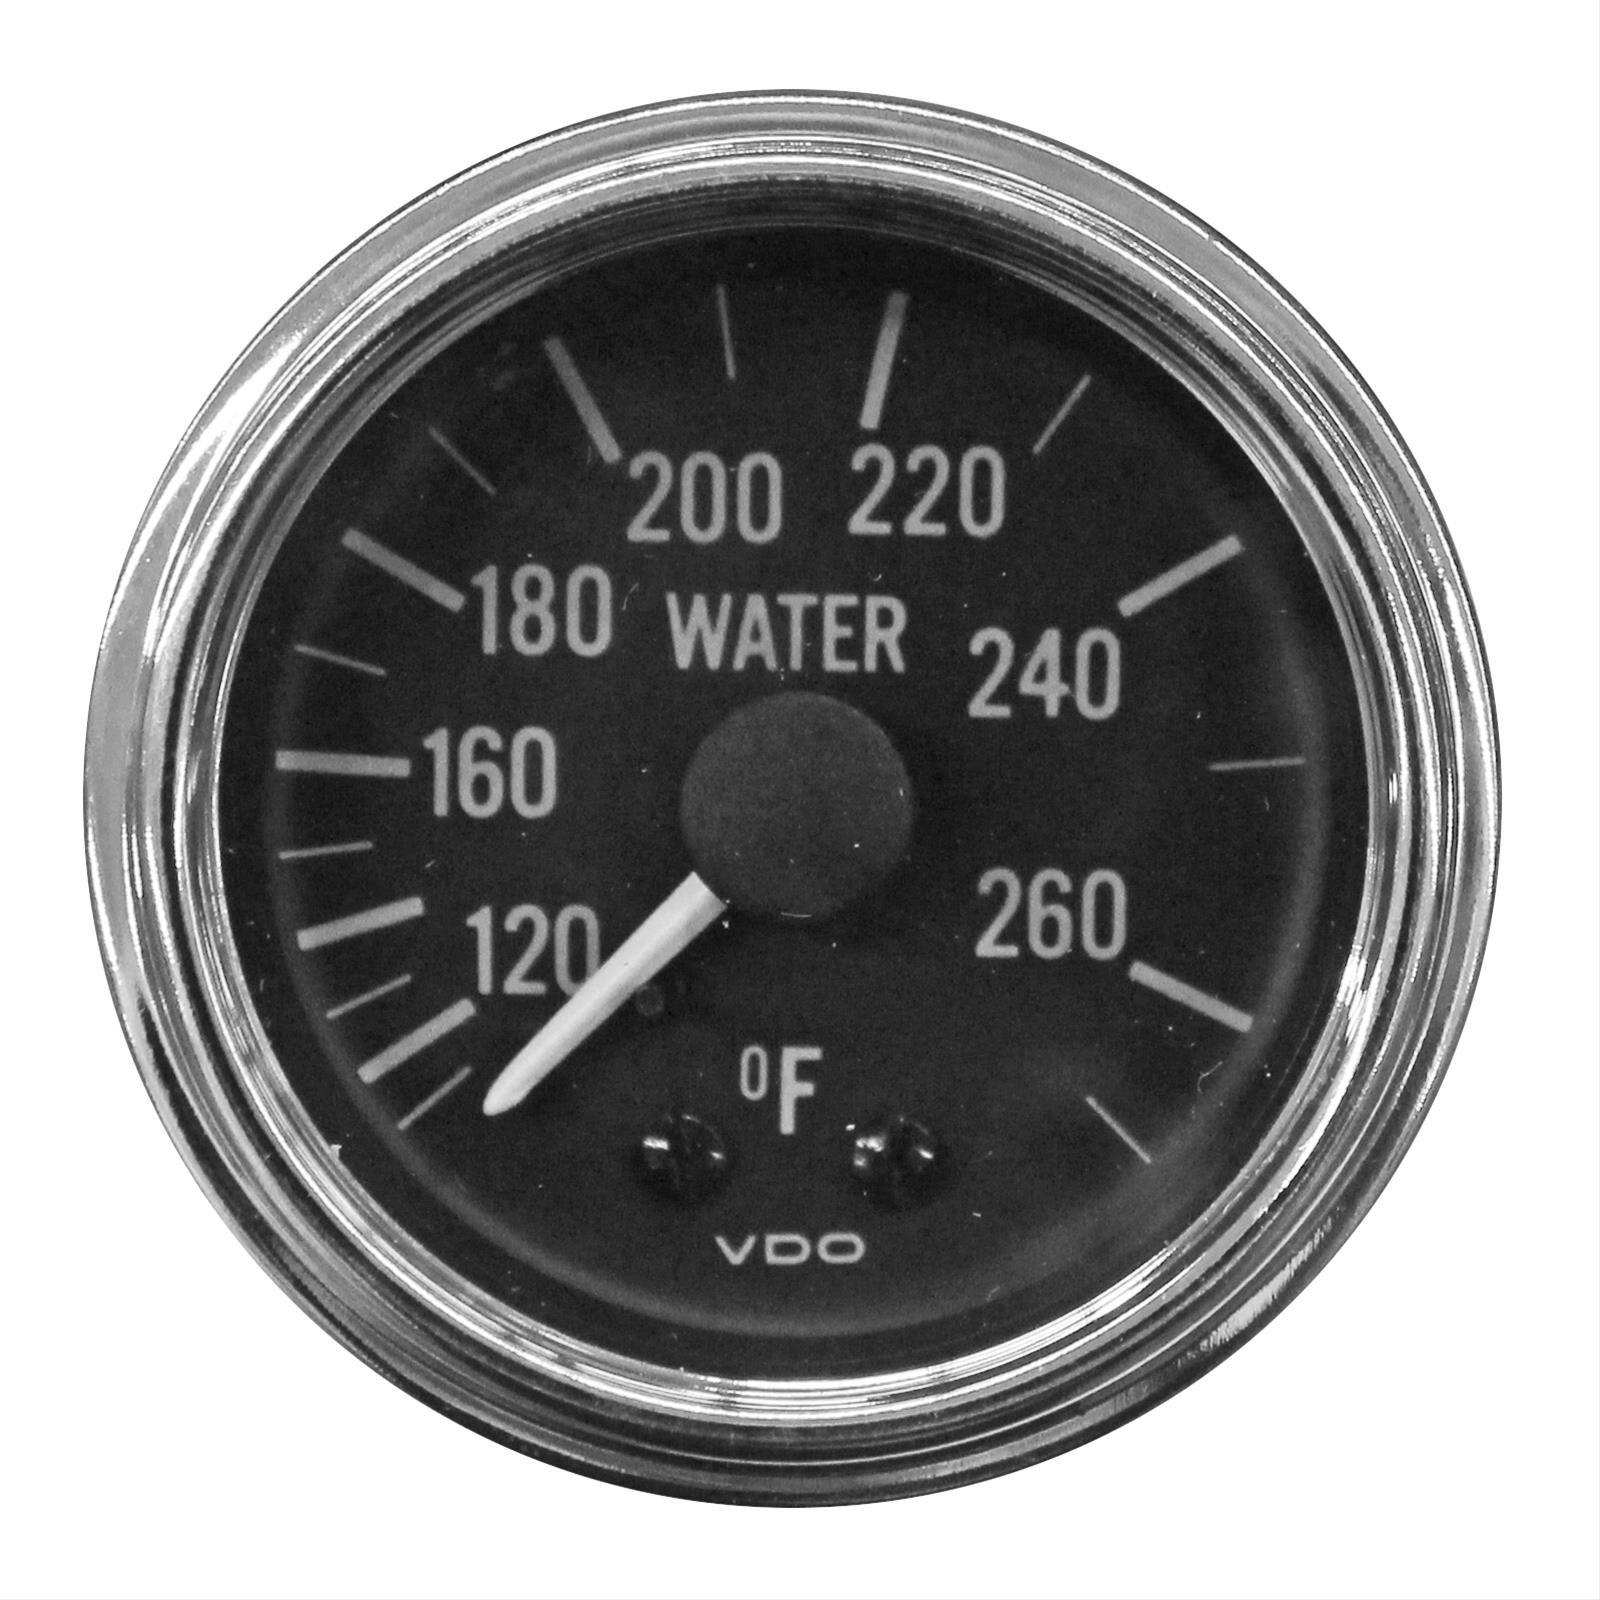 Termometro Digital Infrarrojo Hw-302 Sin Contacto - steelprosafety